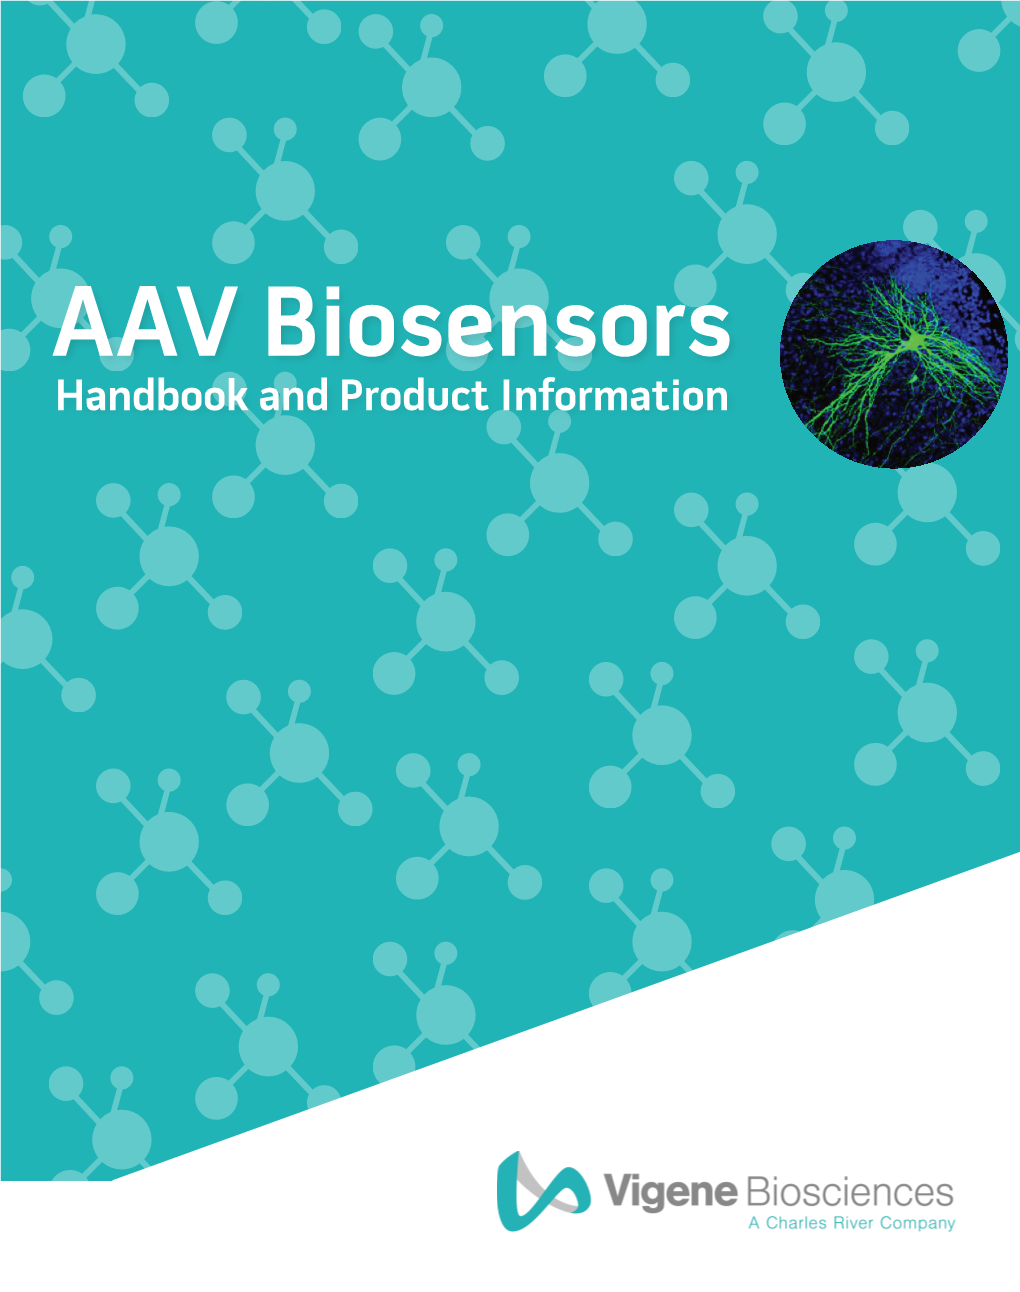 AAV Biosensors Handbook and Product Information Legal Statement of AAV Biosensor